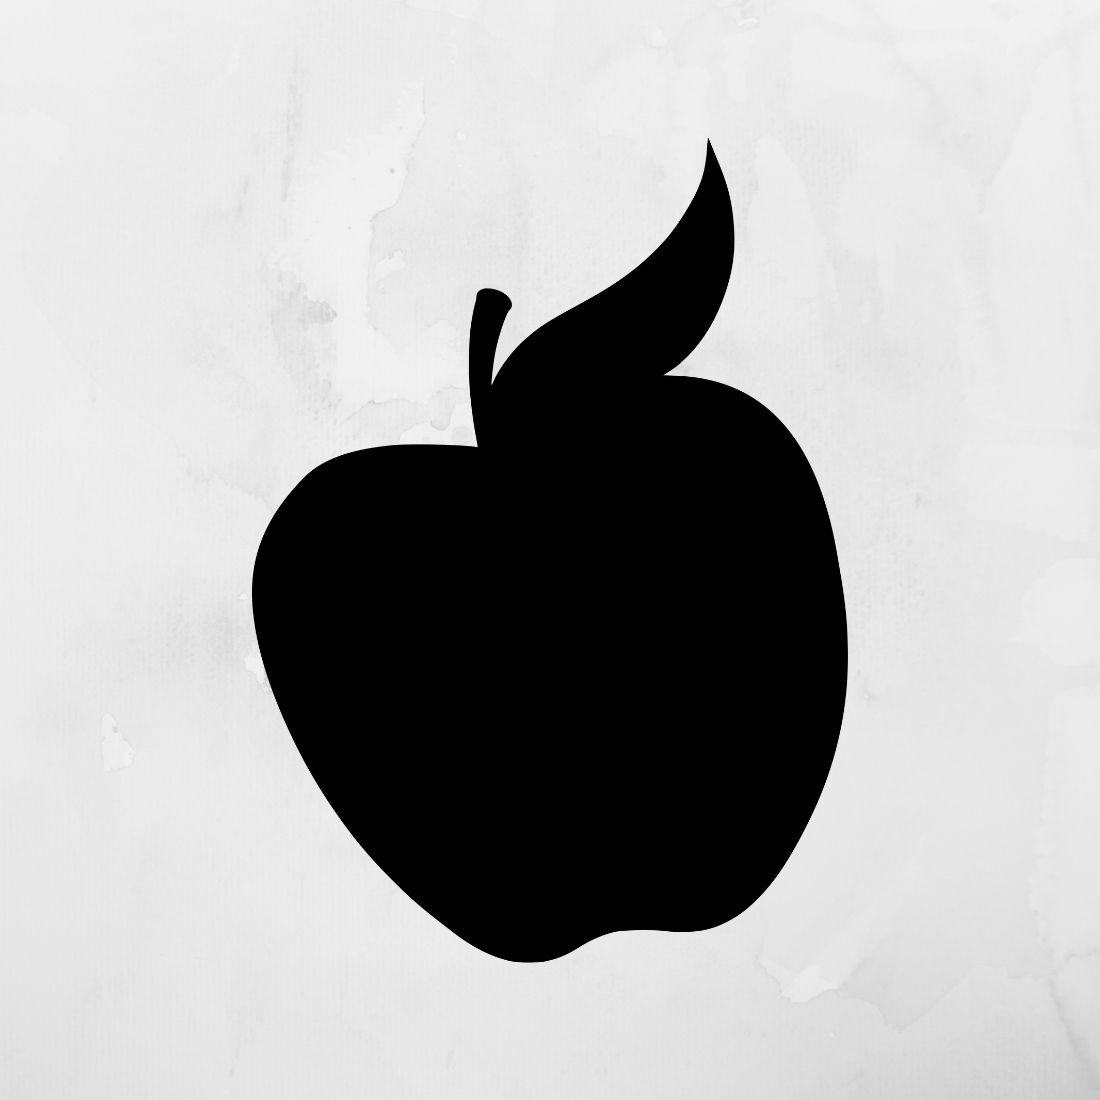 Apple SVG & Apple Silhouette.